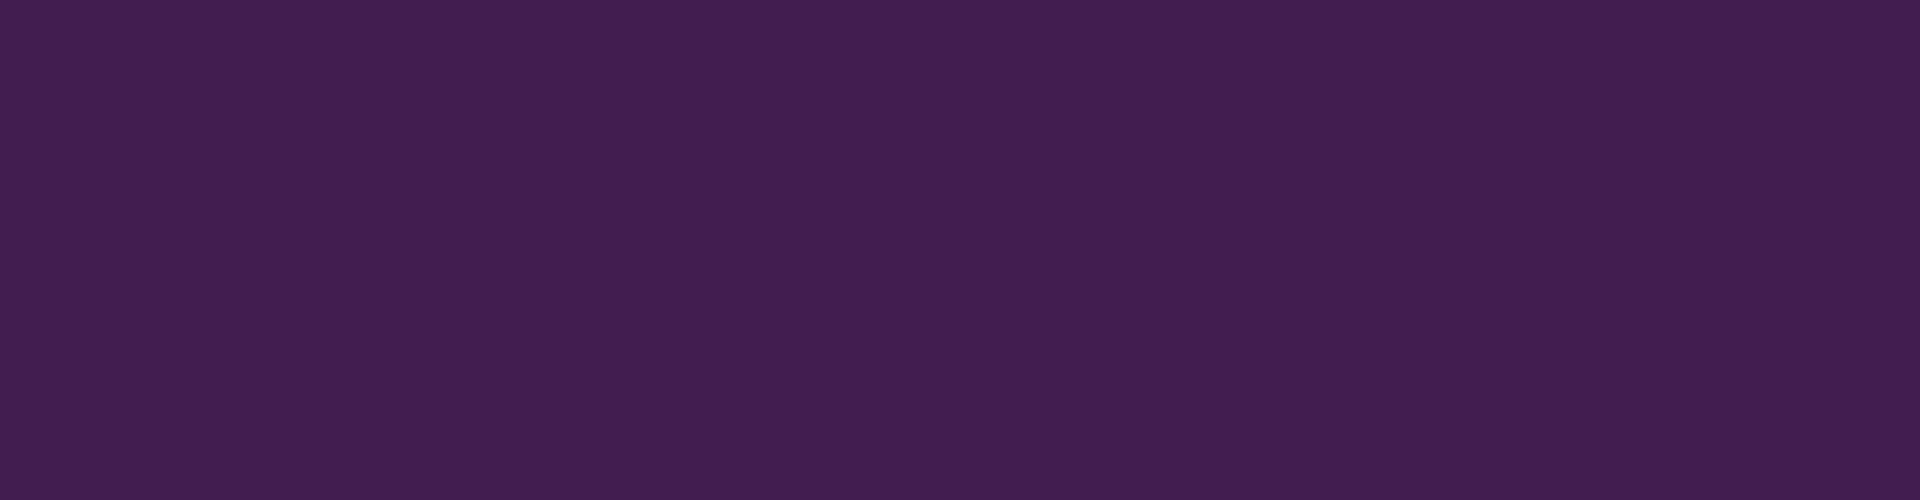 intro-banner-purple-1920x500